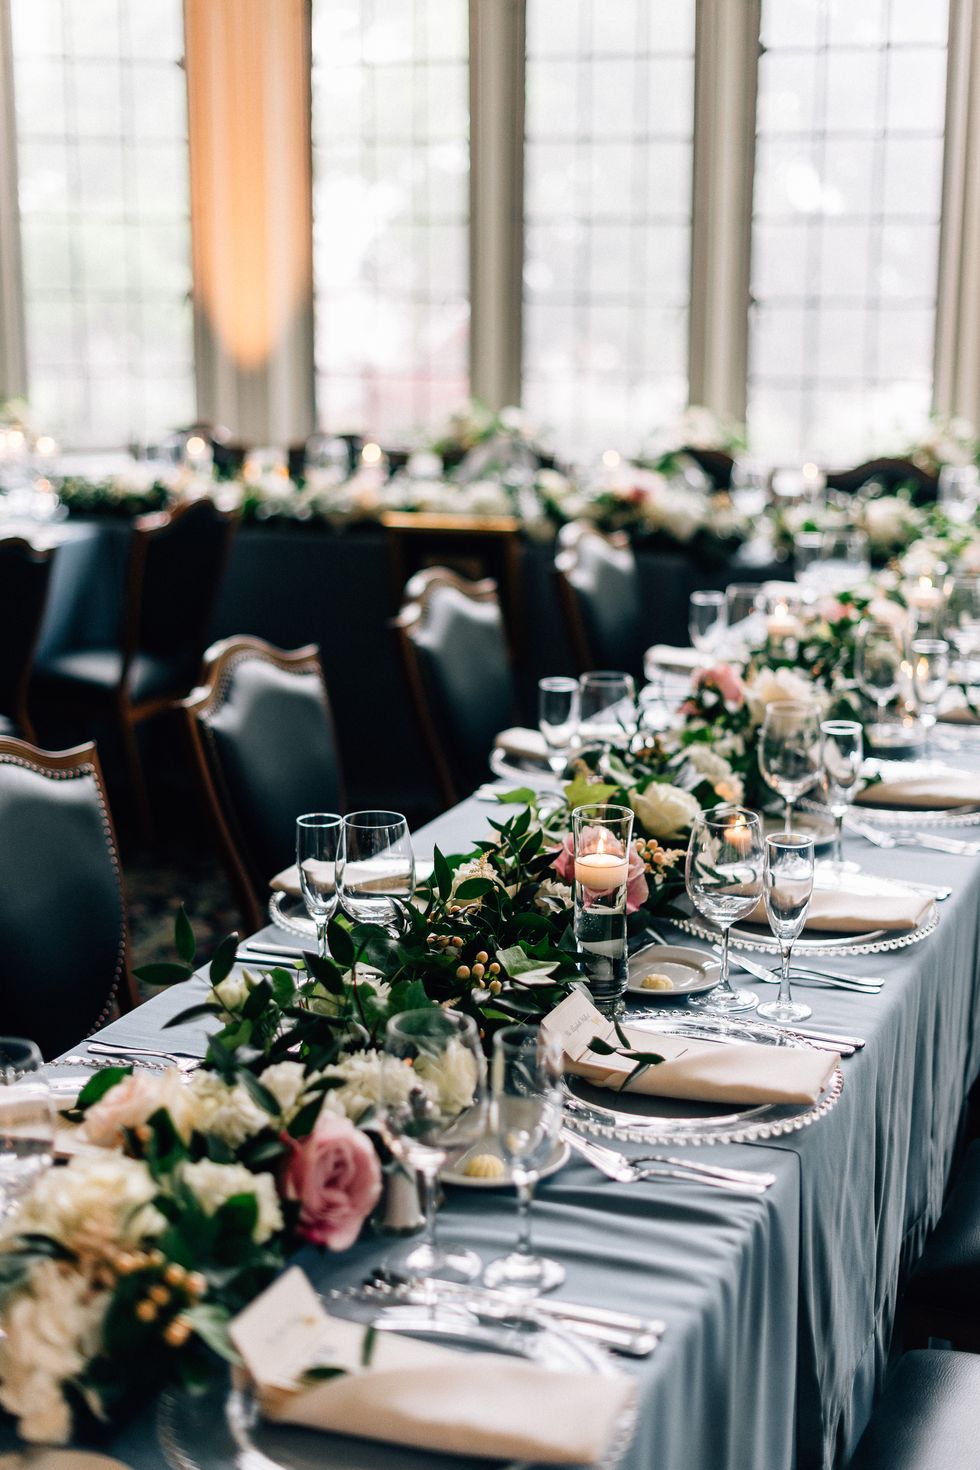 Wedding banquet, Decoration, Rehearsal dinner, Centrepiece, Tablecloth, Chair, Wedding reception, Table, Flower, Floral design, 